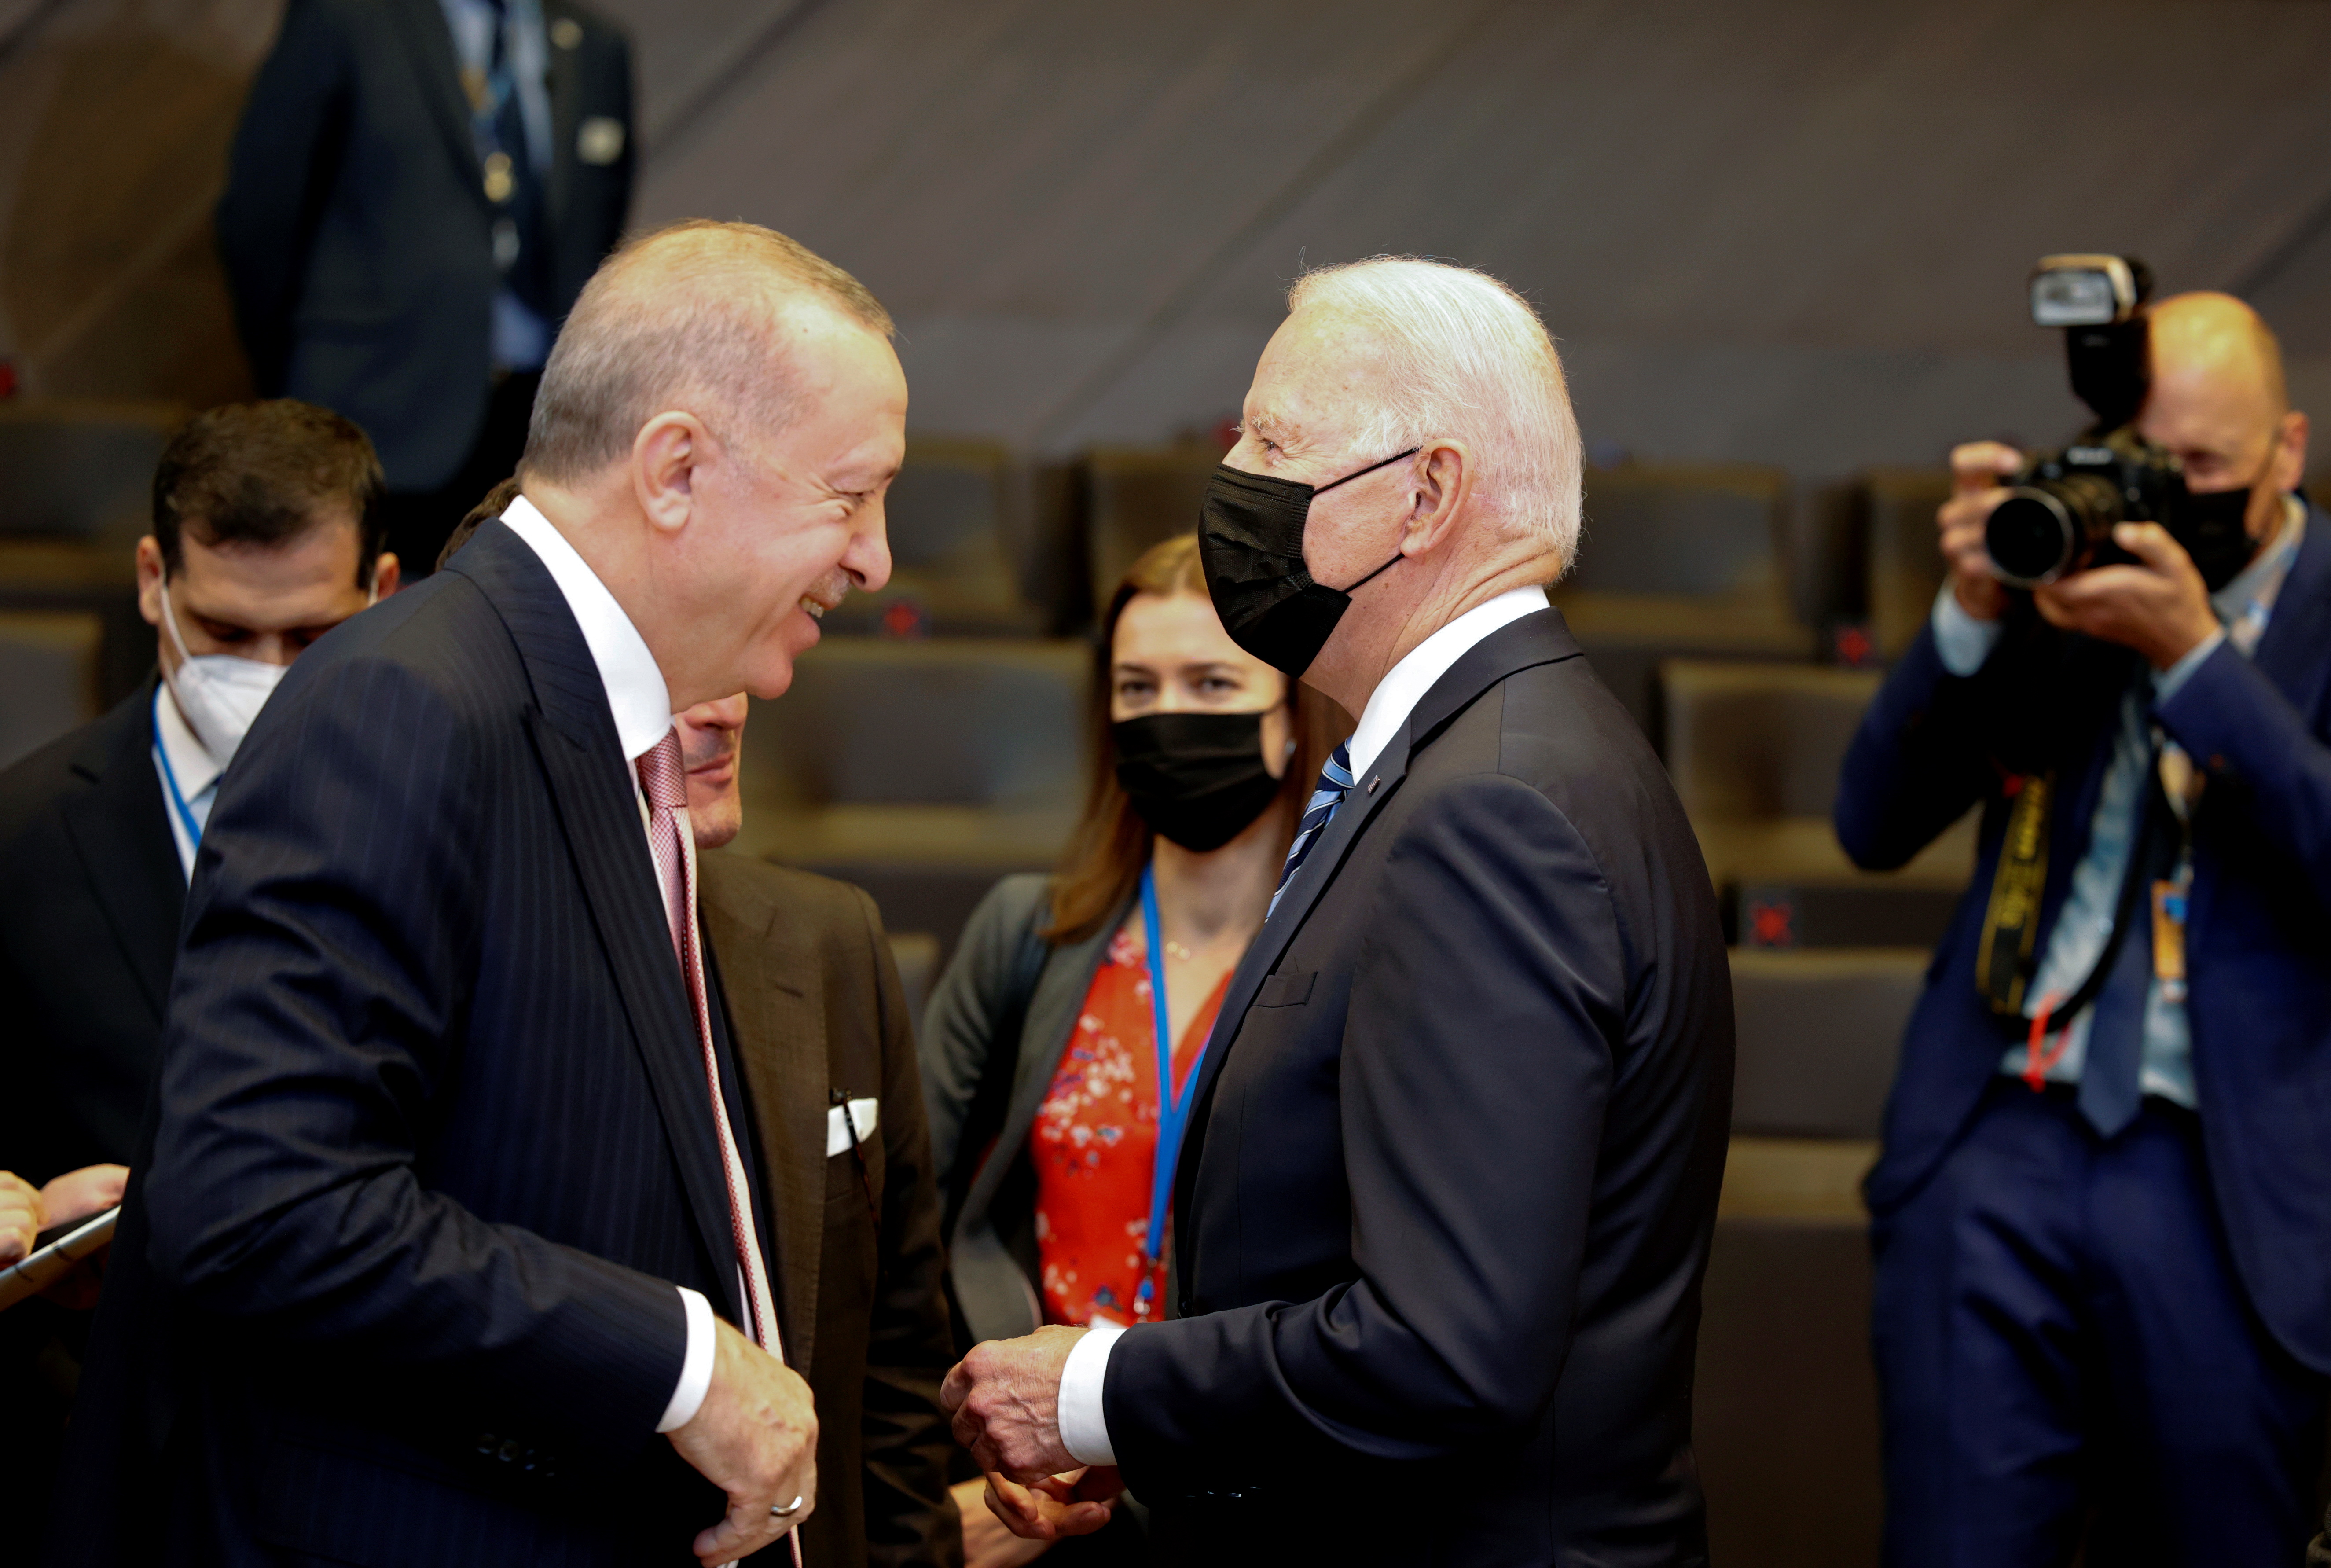 Turkey's President Tayyip Erdogan speaks with U.S. President Joe Biden during a plenary session at a NATO summit in Brussels, Belgium, June 14, 2021. Olivier Matthys/Pool via REUTERS